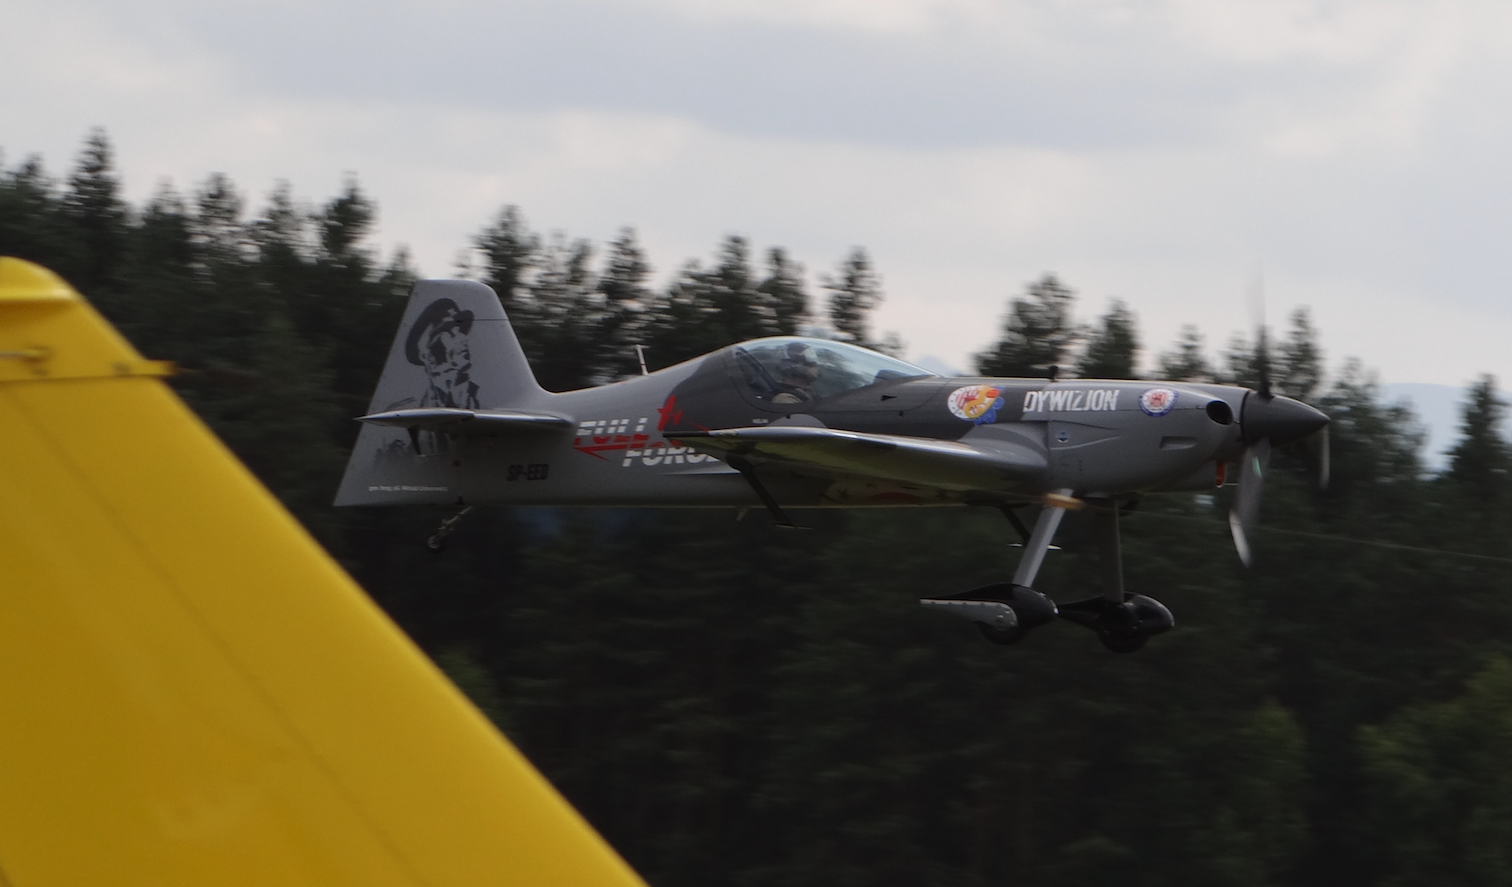 XtremeAir XA-41 z pilotem Artur Kielak. Nowy Targ 2018 rok. Zdjęcie Karol Placha Hetman